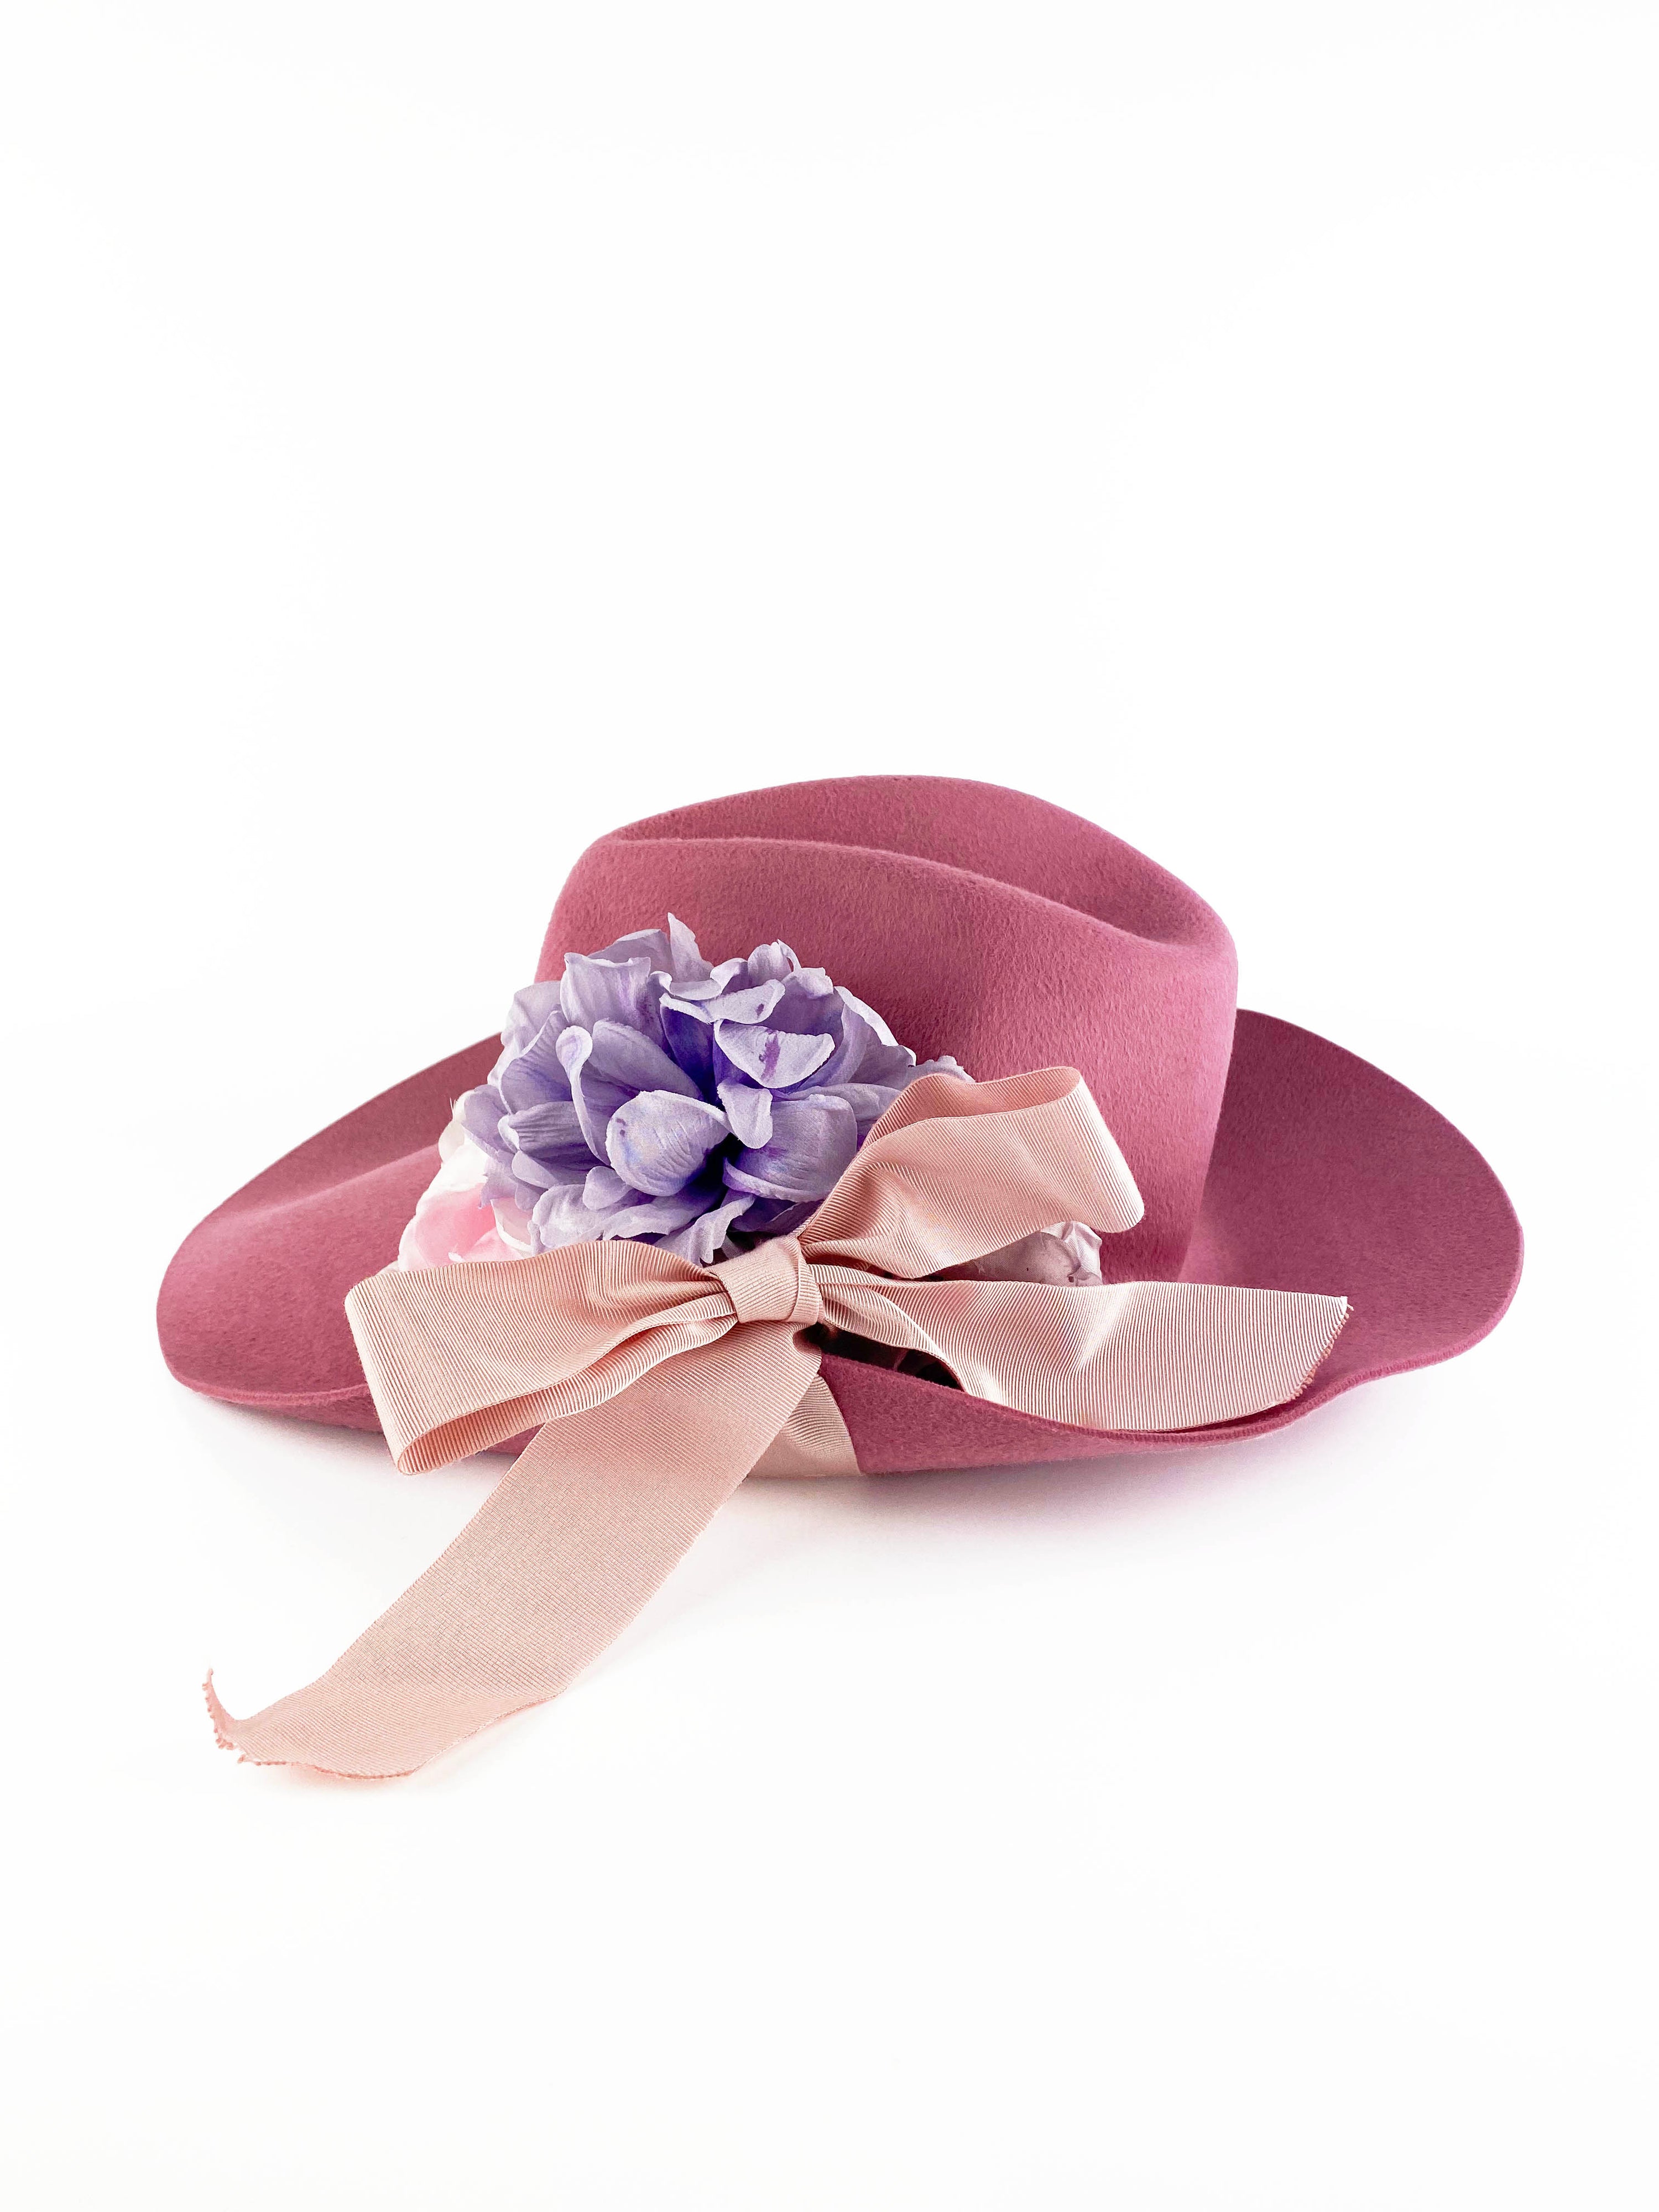 Gucci Pink Wide Brim Felt Hat with Flowers 56